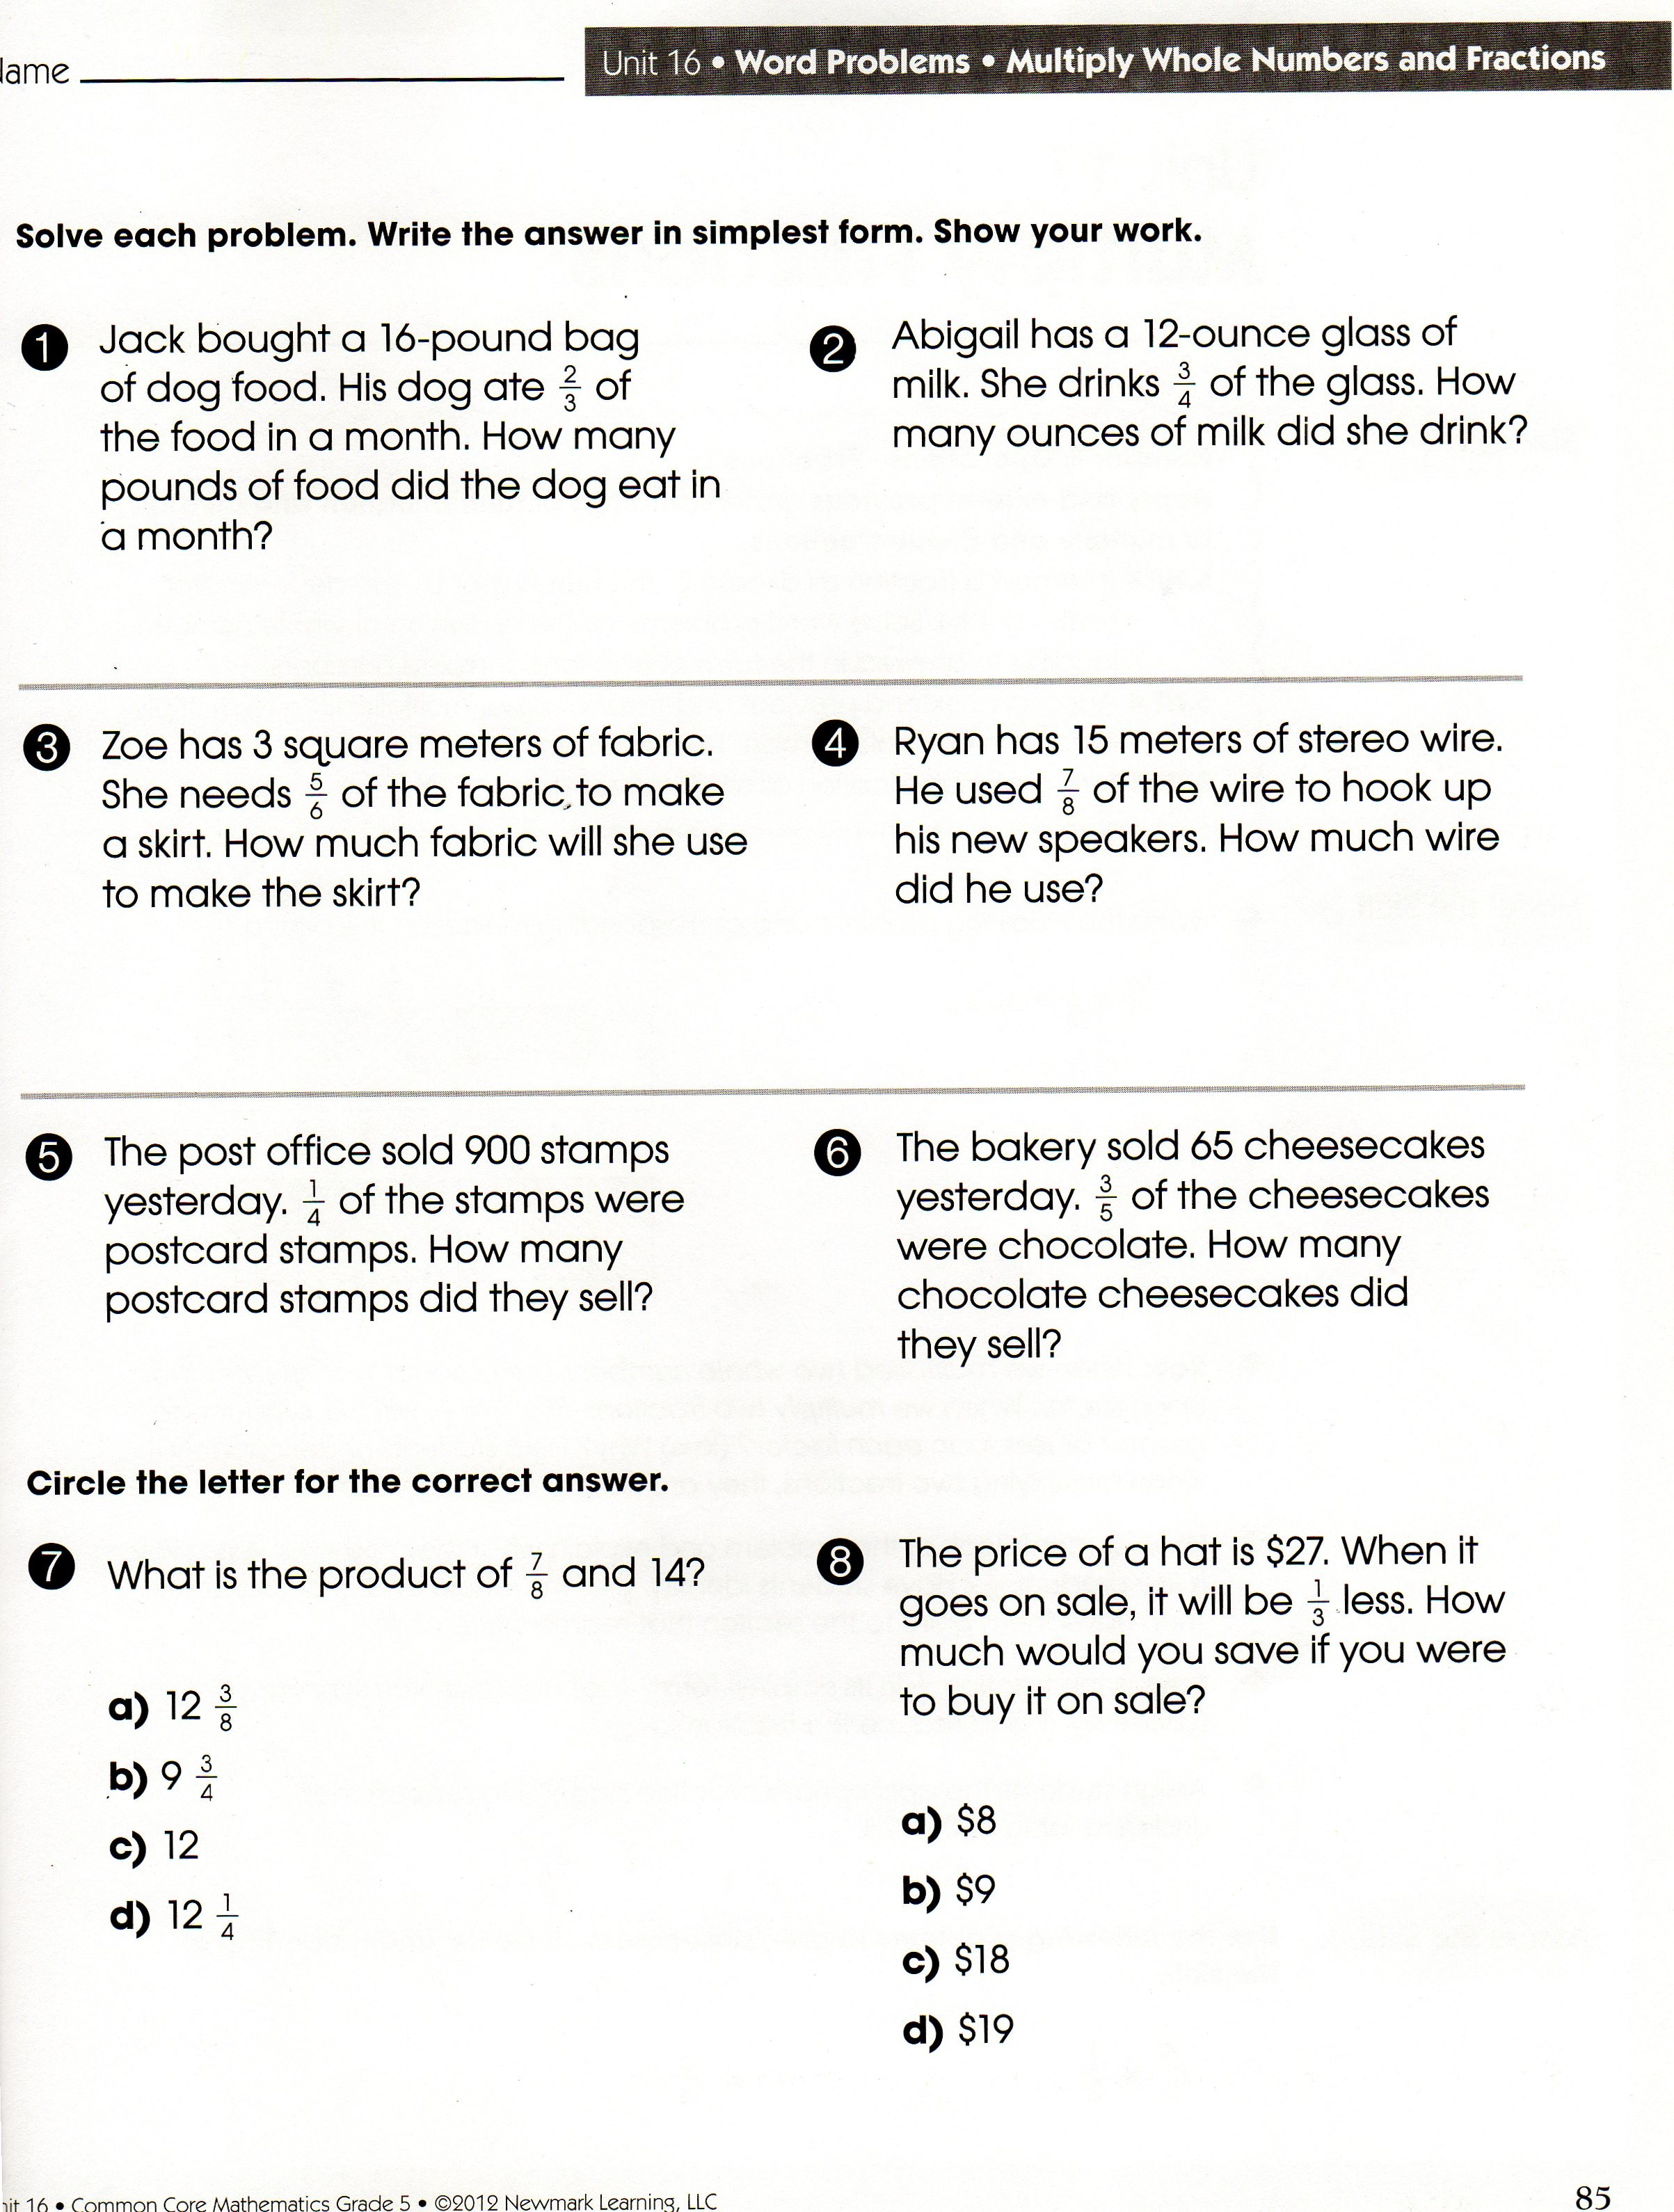 4Th Grade Math Word Problems Worksheets Pdf Db excel